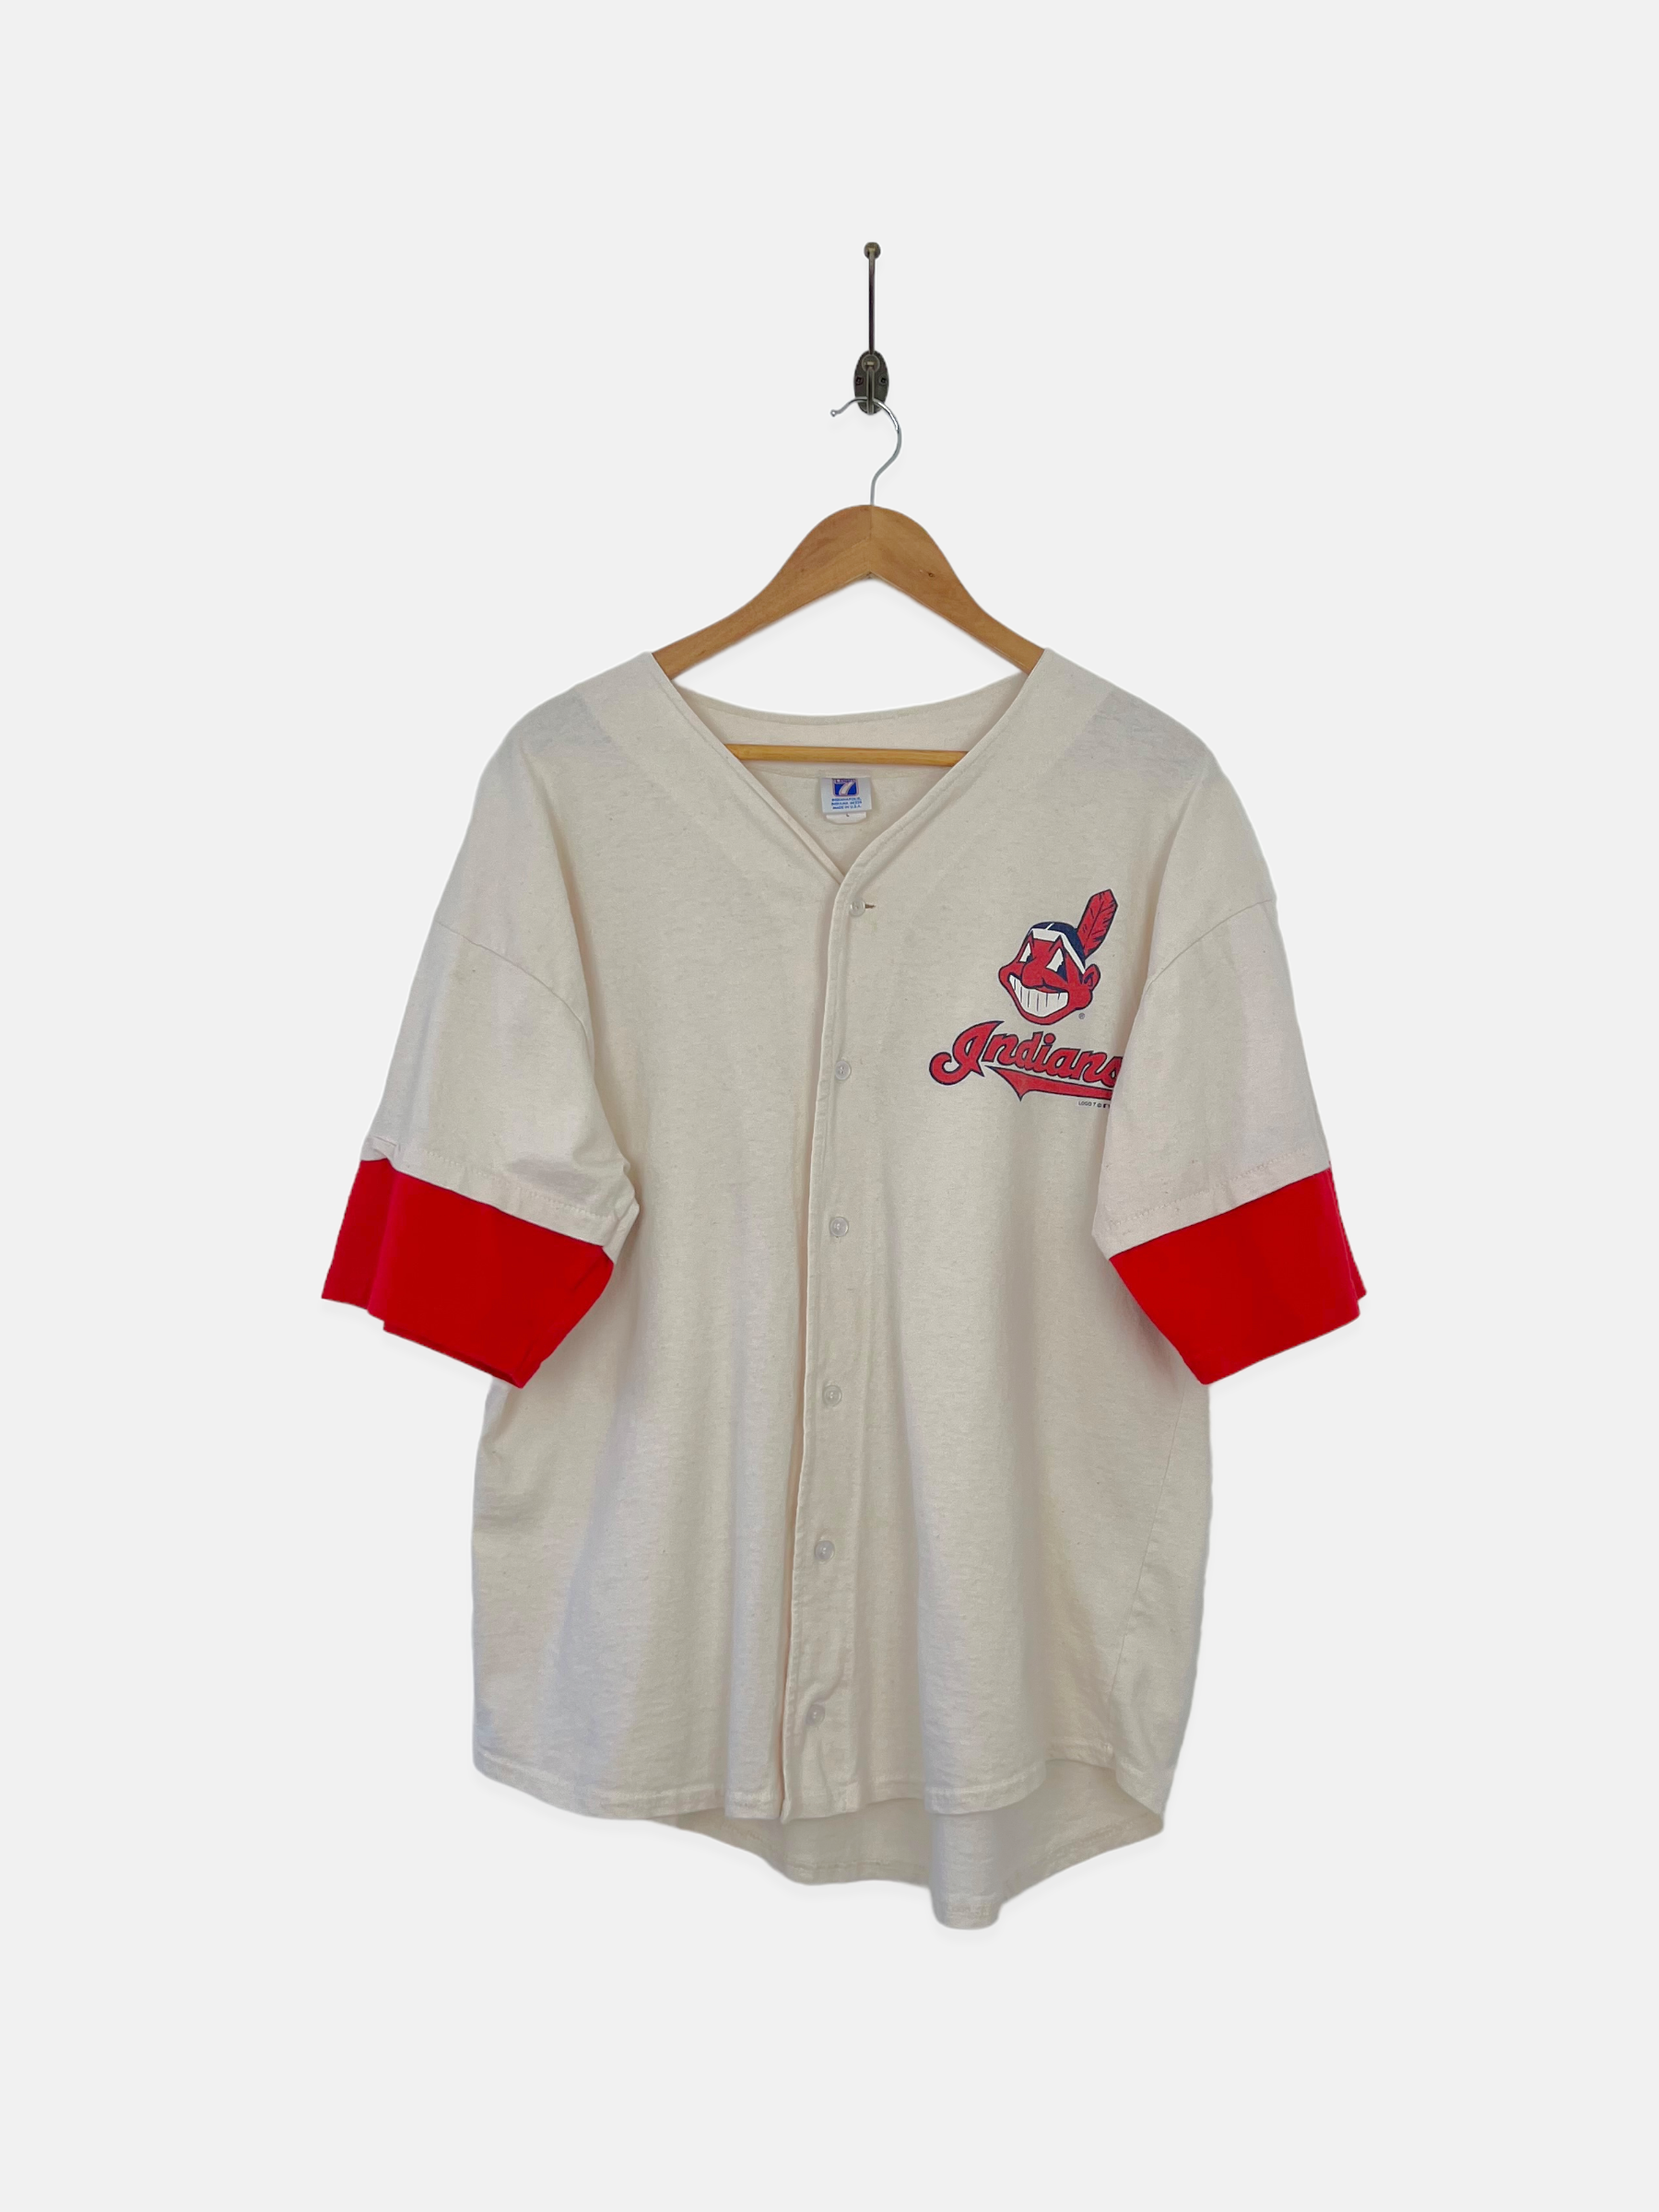 1995 Cleveland Indians MLB USA Made Vintage Baseball Jersey